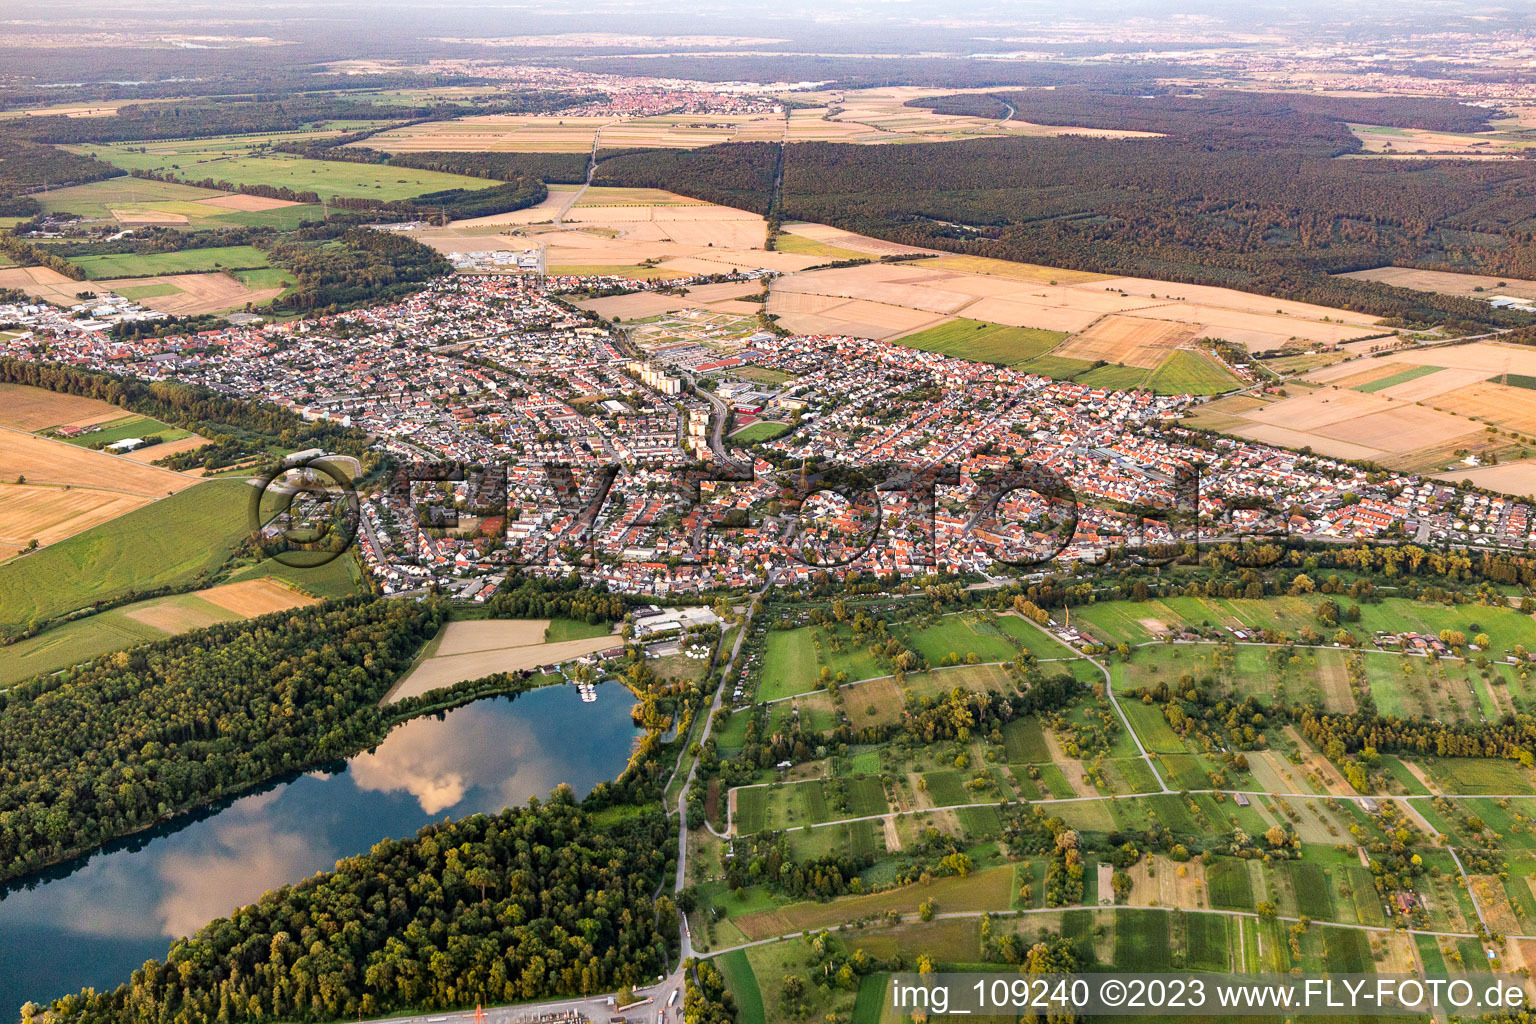 Quartier Linkenheim in Linkenheim-Hochstetten dans le département Bade-Wurtemberg, Allemagne vue d'en haut